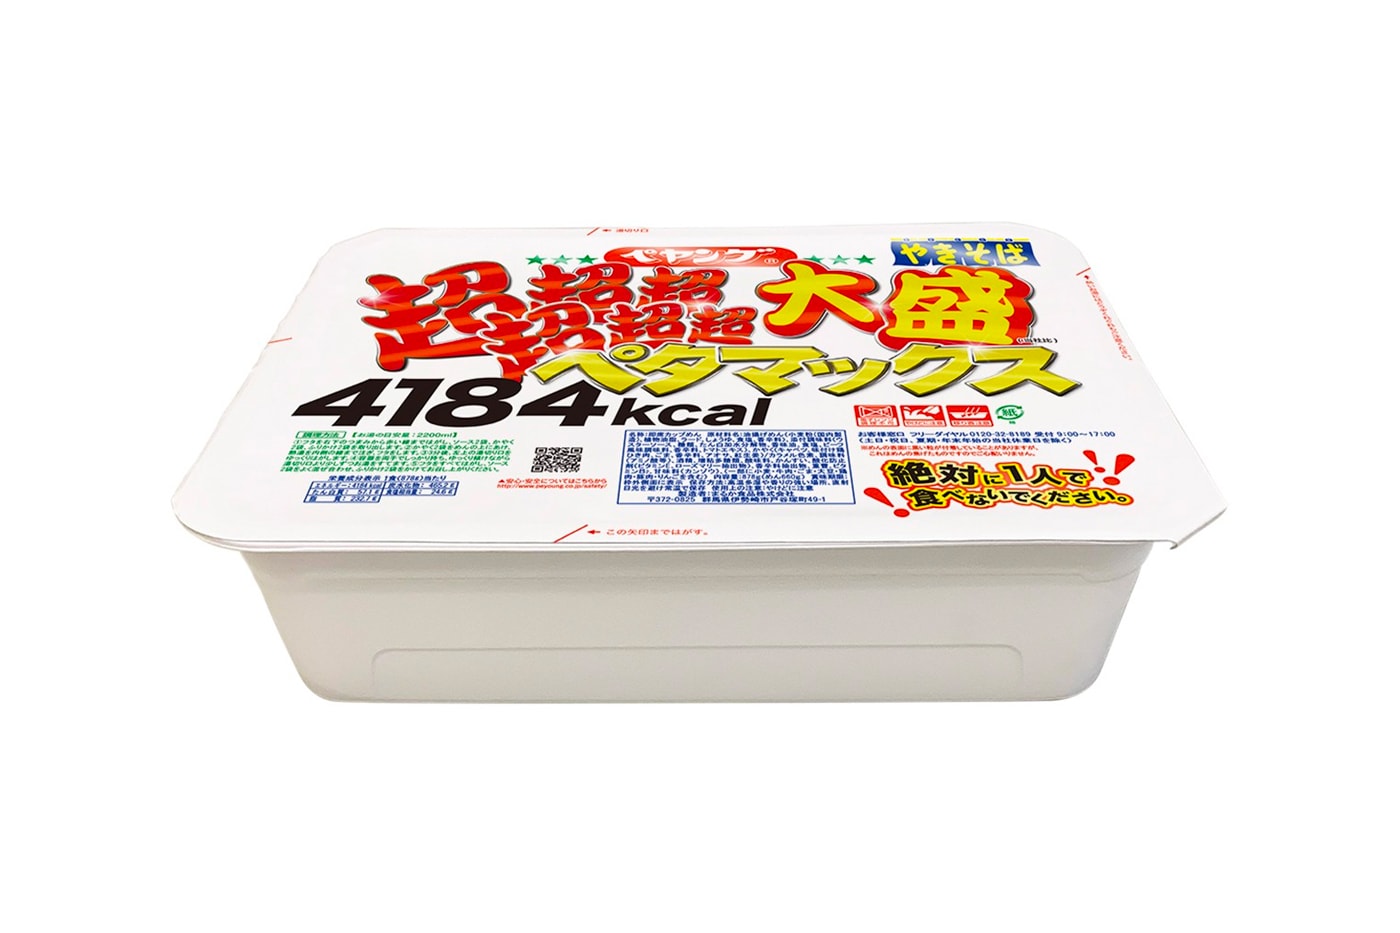 Maruka Foods 4184 Calorie Peyoung Super Super Super Super Super Super Large Yakisoba Petamax Info Release Where Buy Price